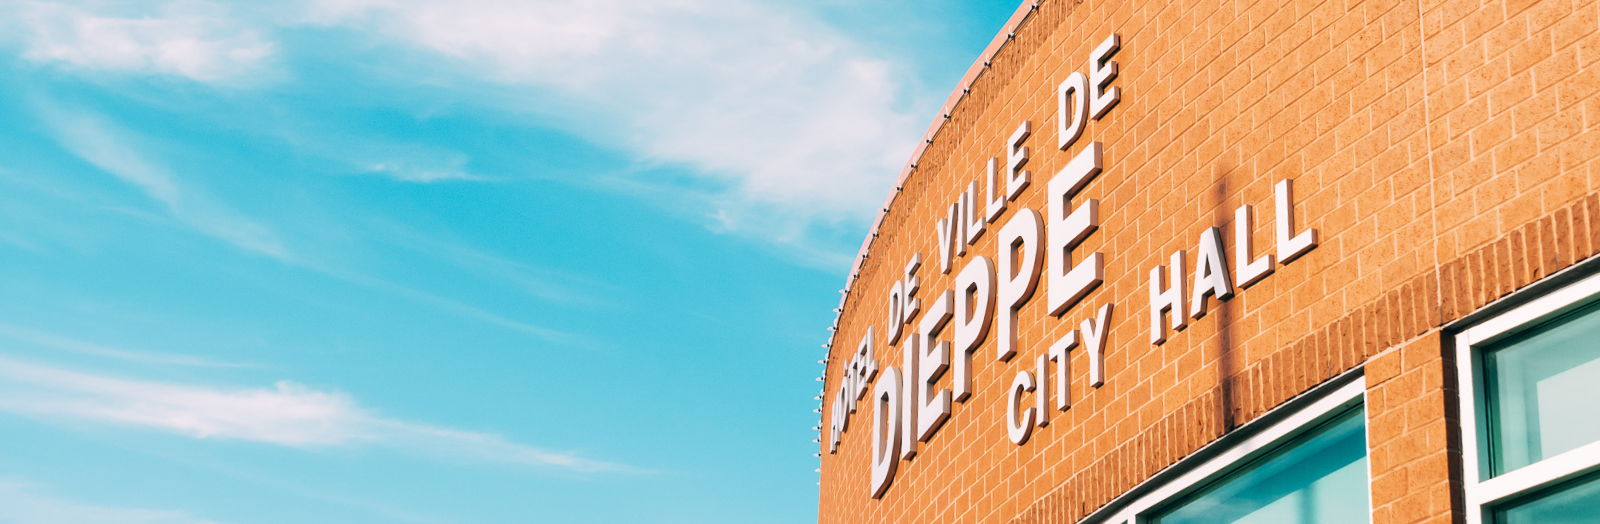 Dieppe City Hall's sign